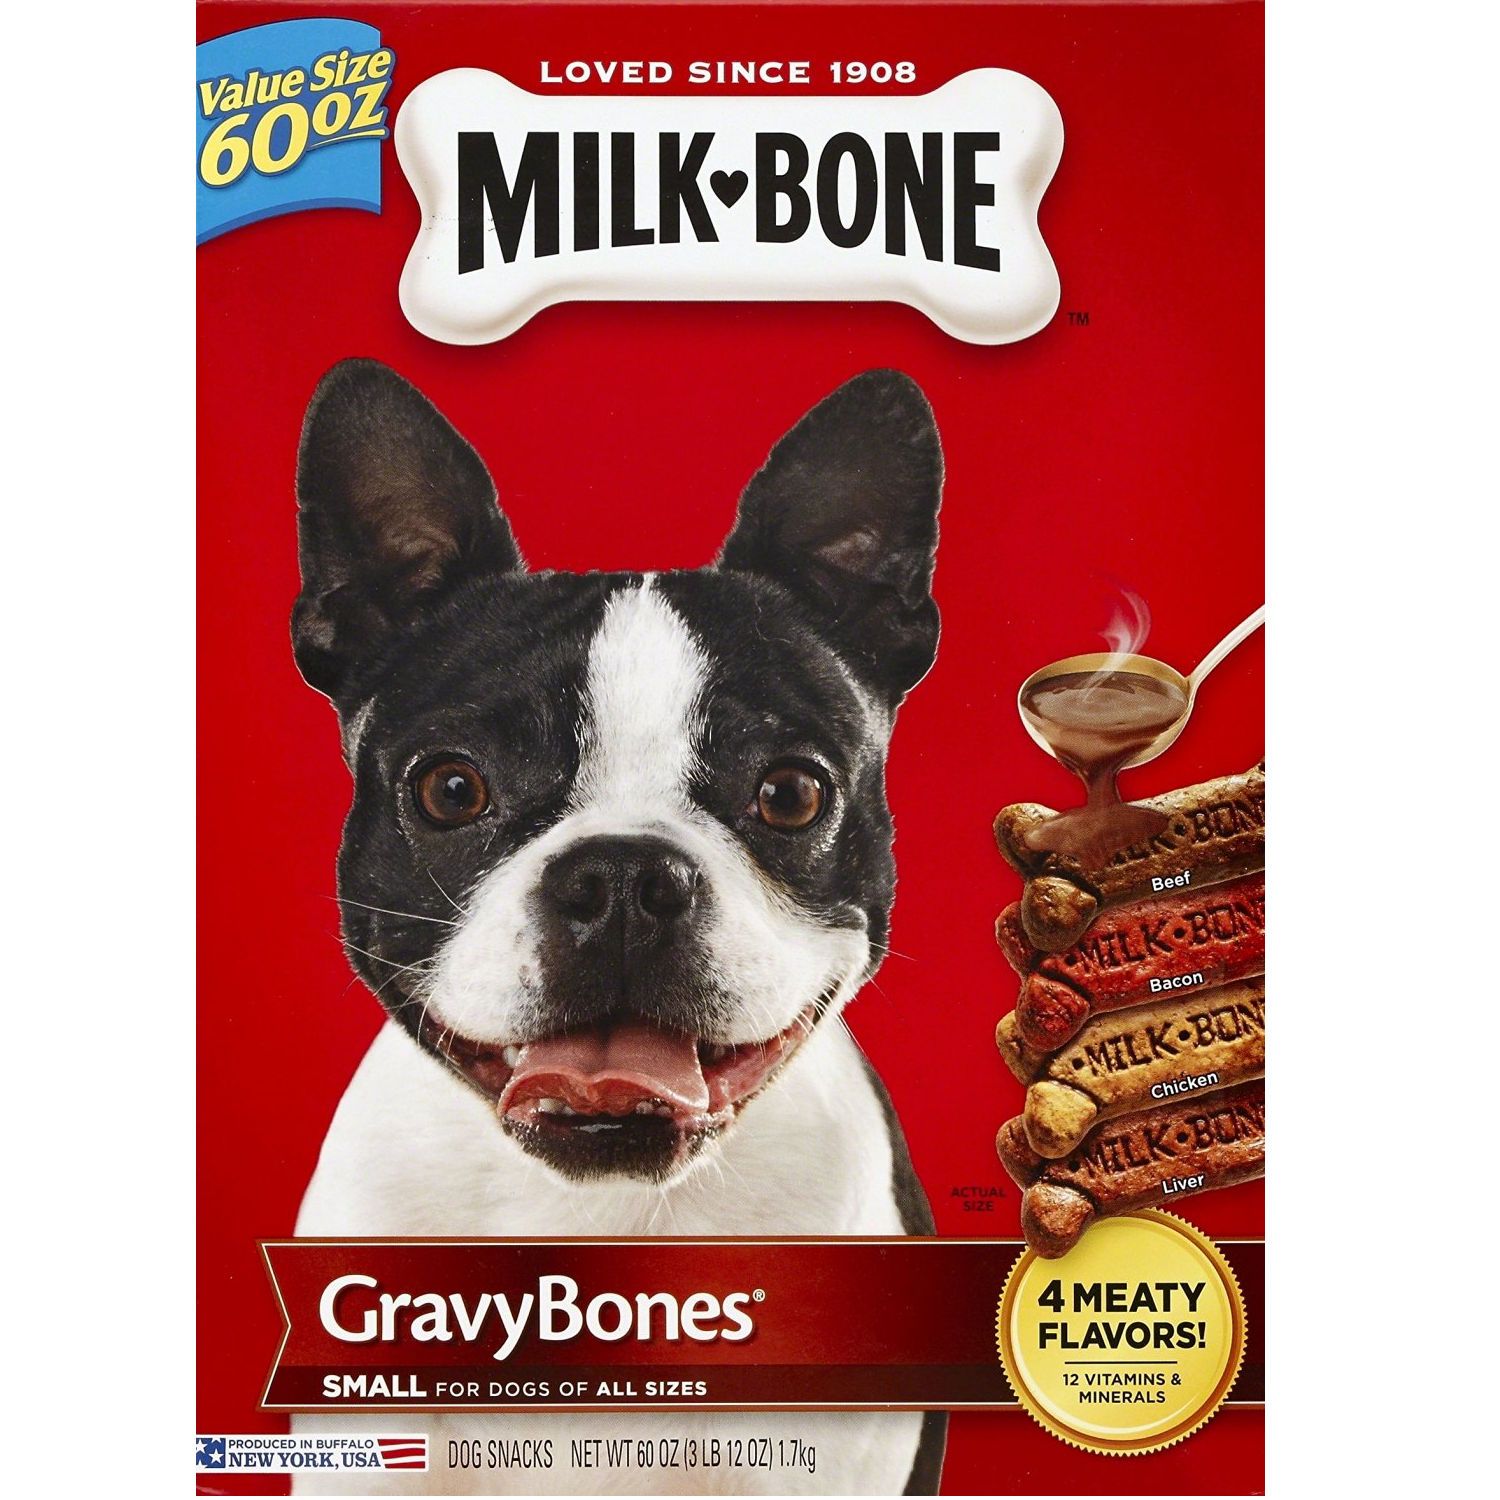 Milk-Bone Gravybones Dog Biscuits (60oz) 4 Count Only $15.30 – That’s $3.83 Per Box!